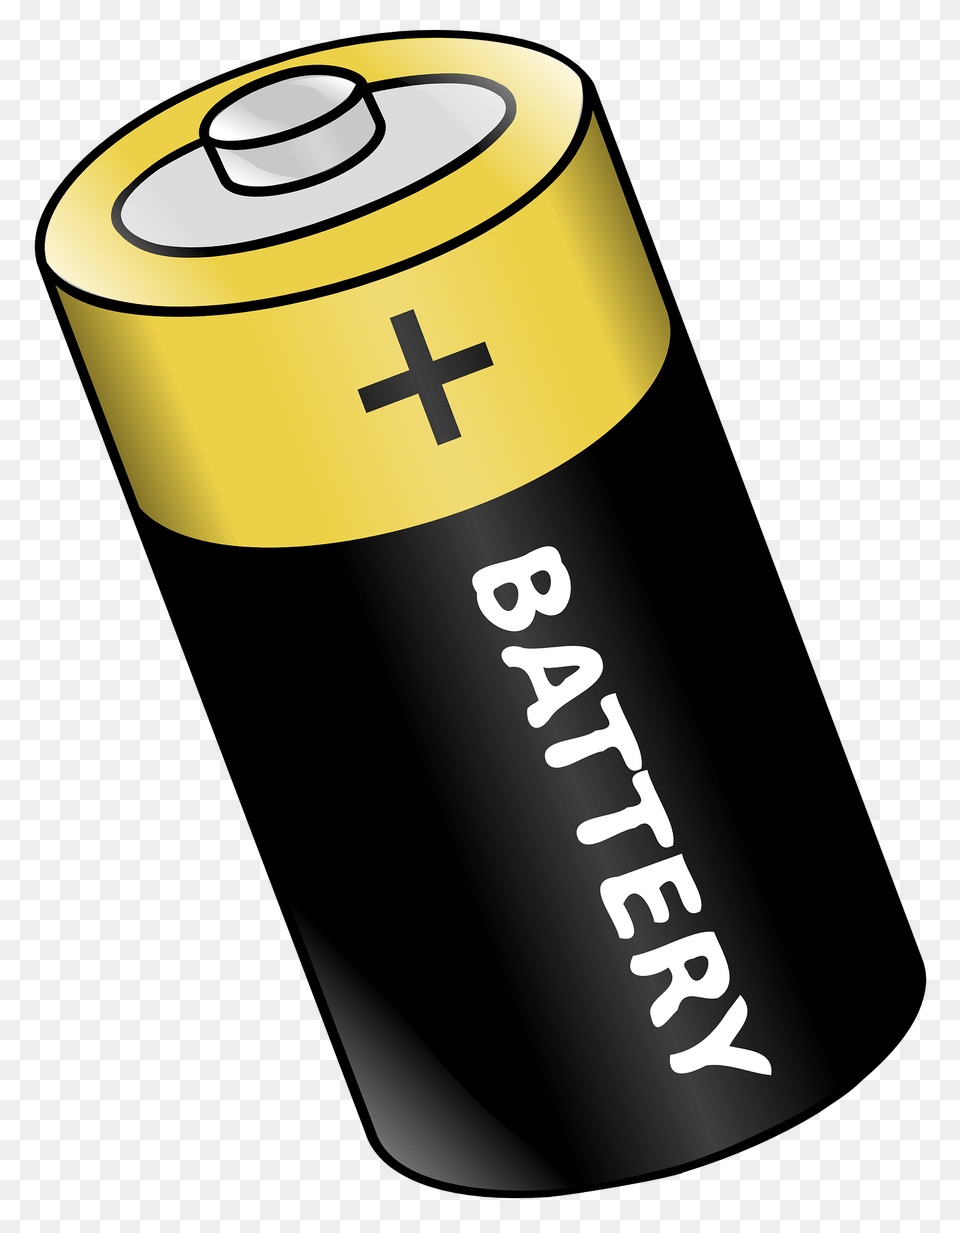 Pngpix Com Battery Image, Weapon, Bottle, Shaker Free Png